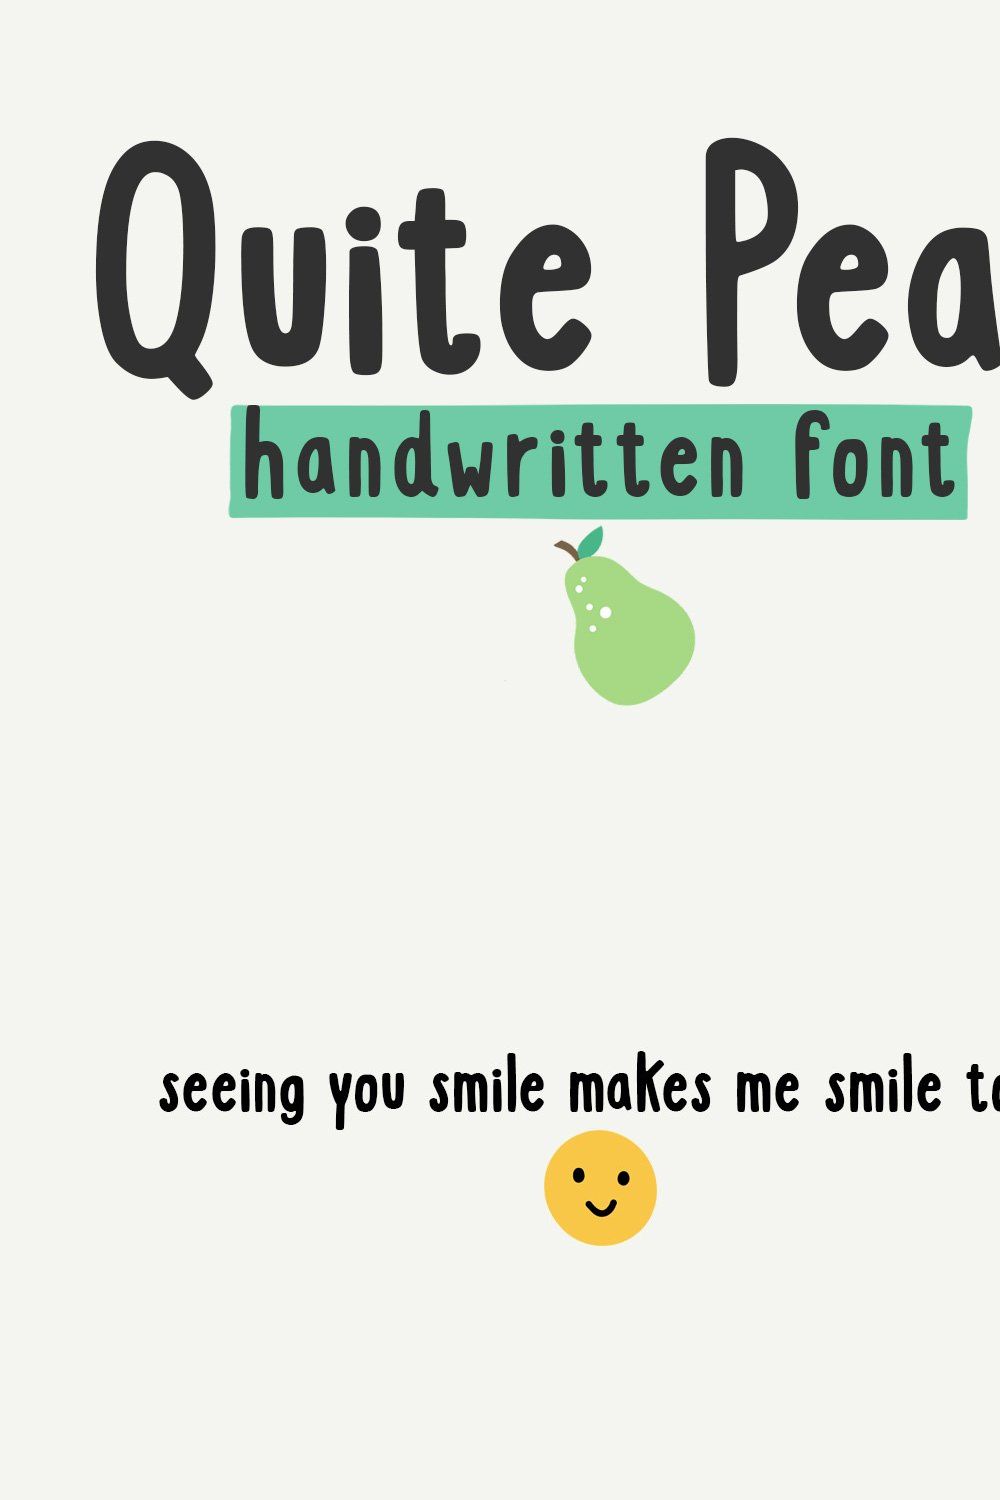 Quite Pear - A Fun Handwritten Font pinterest preview image.